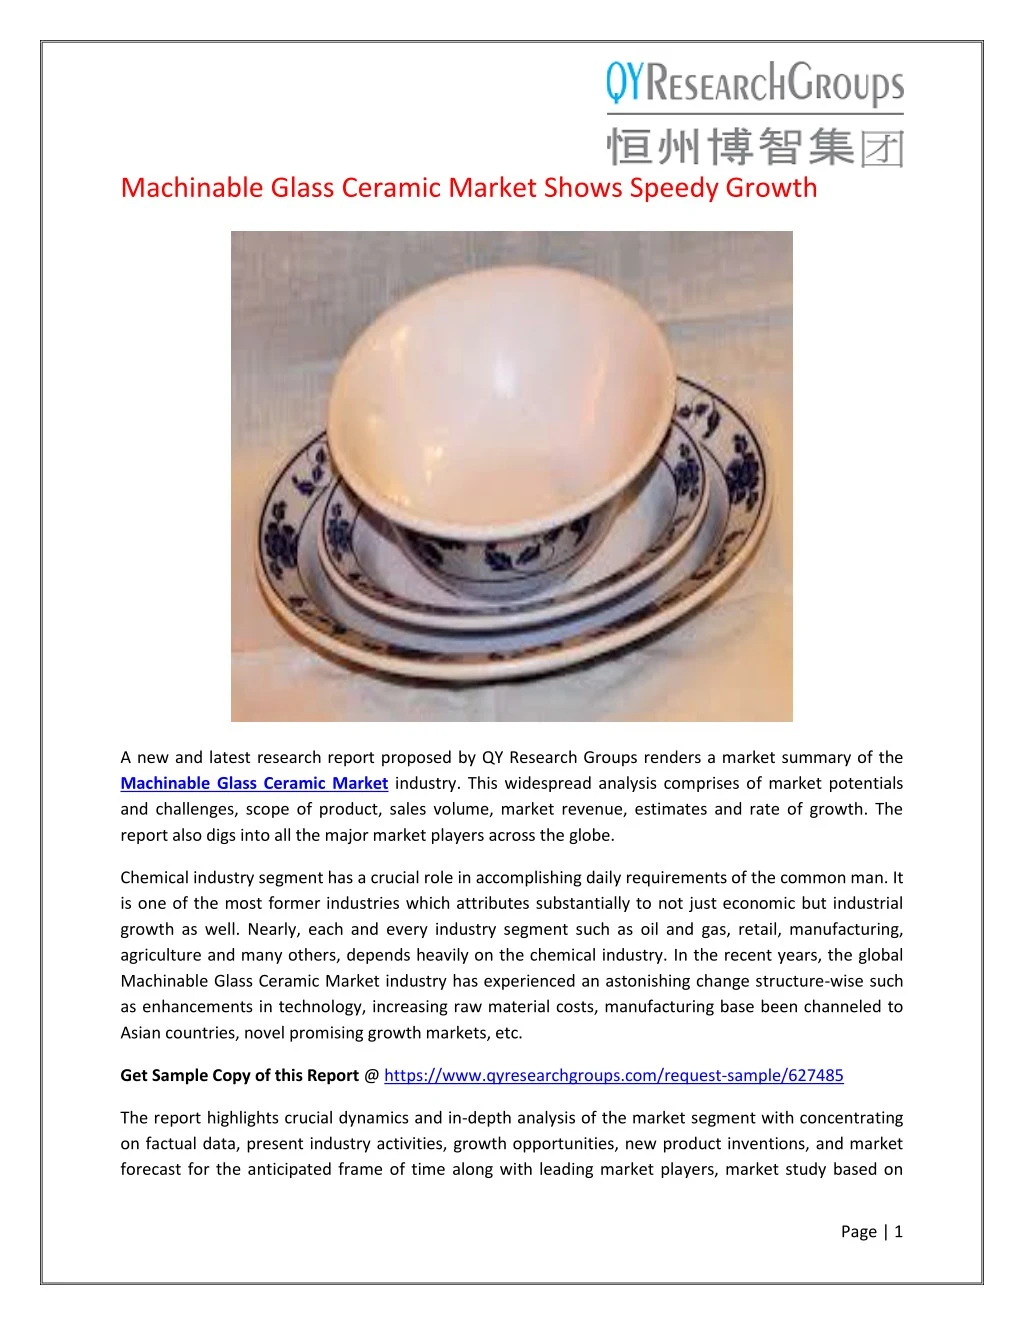 machinable glass ceramic market shows speedy